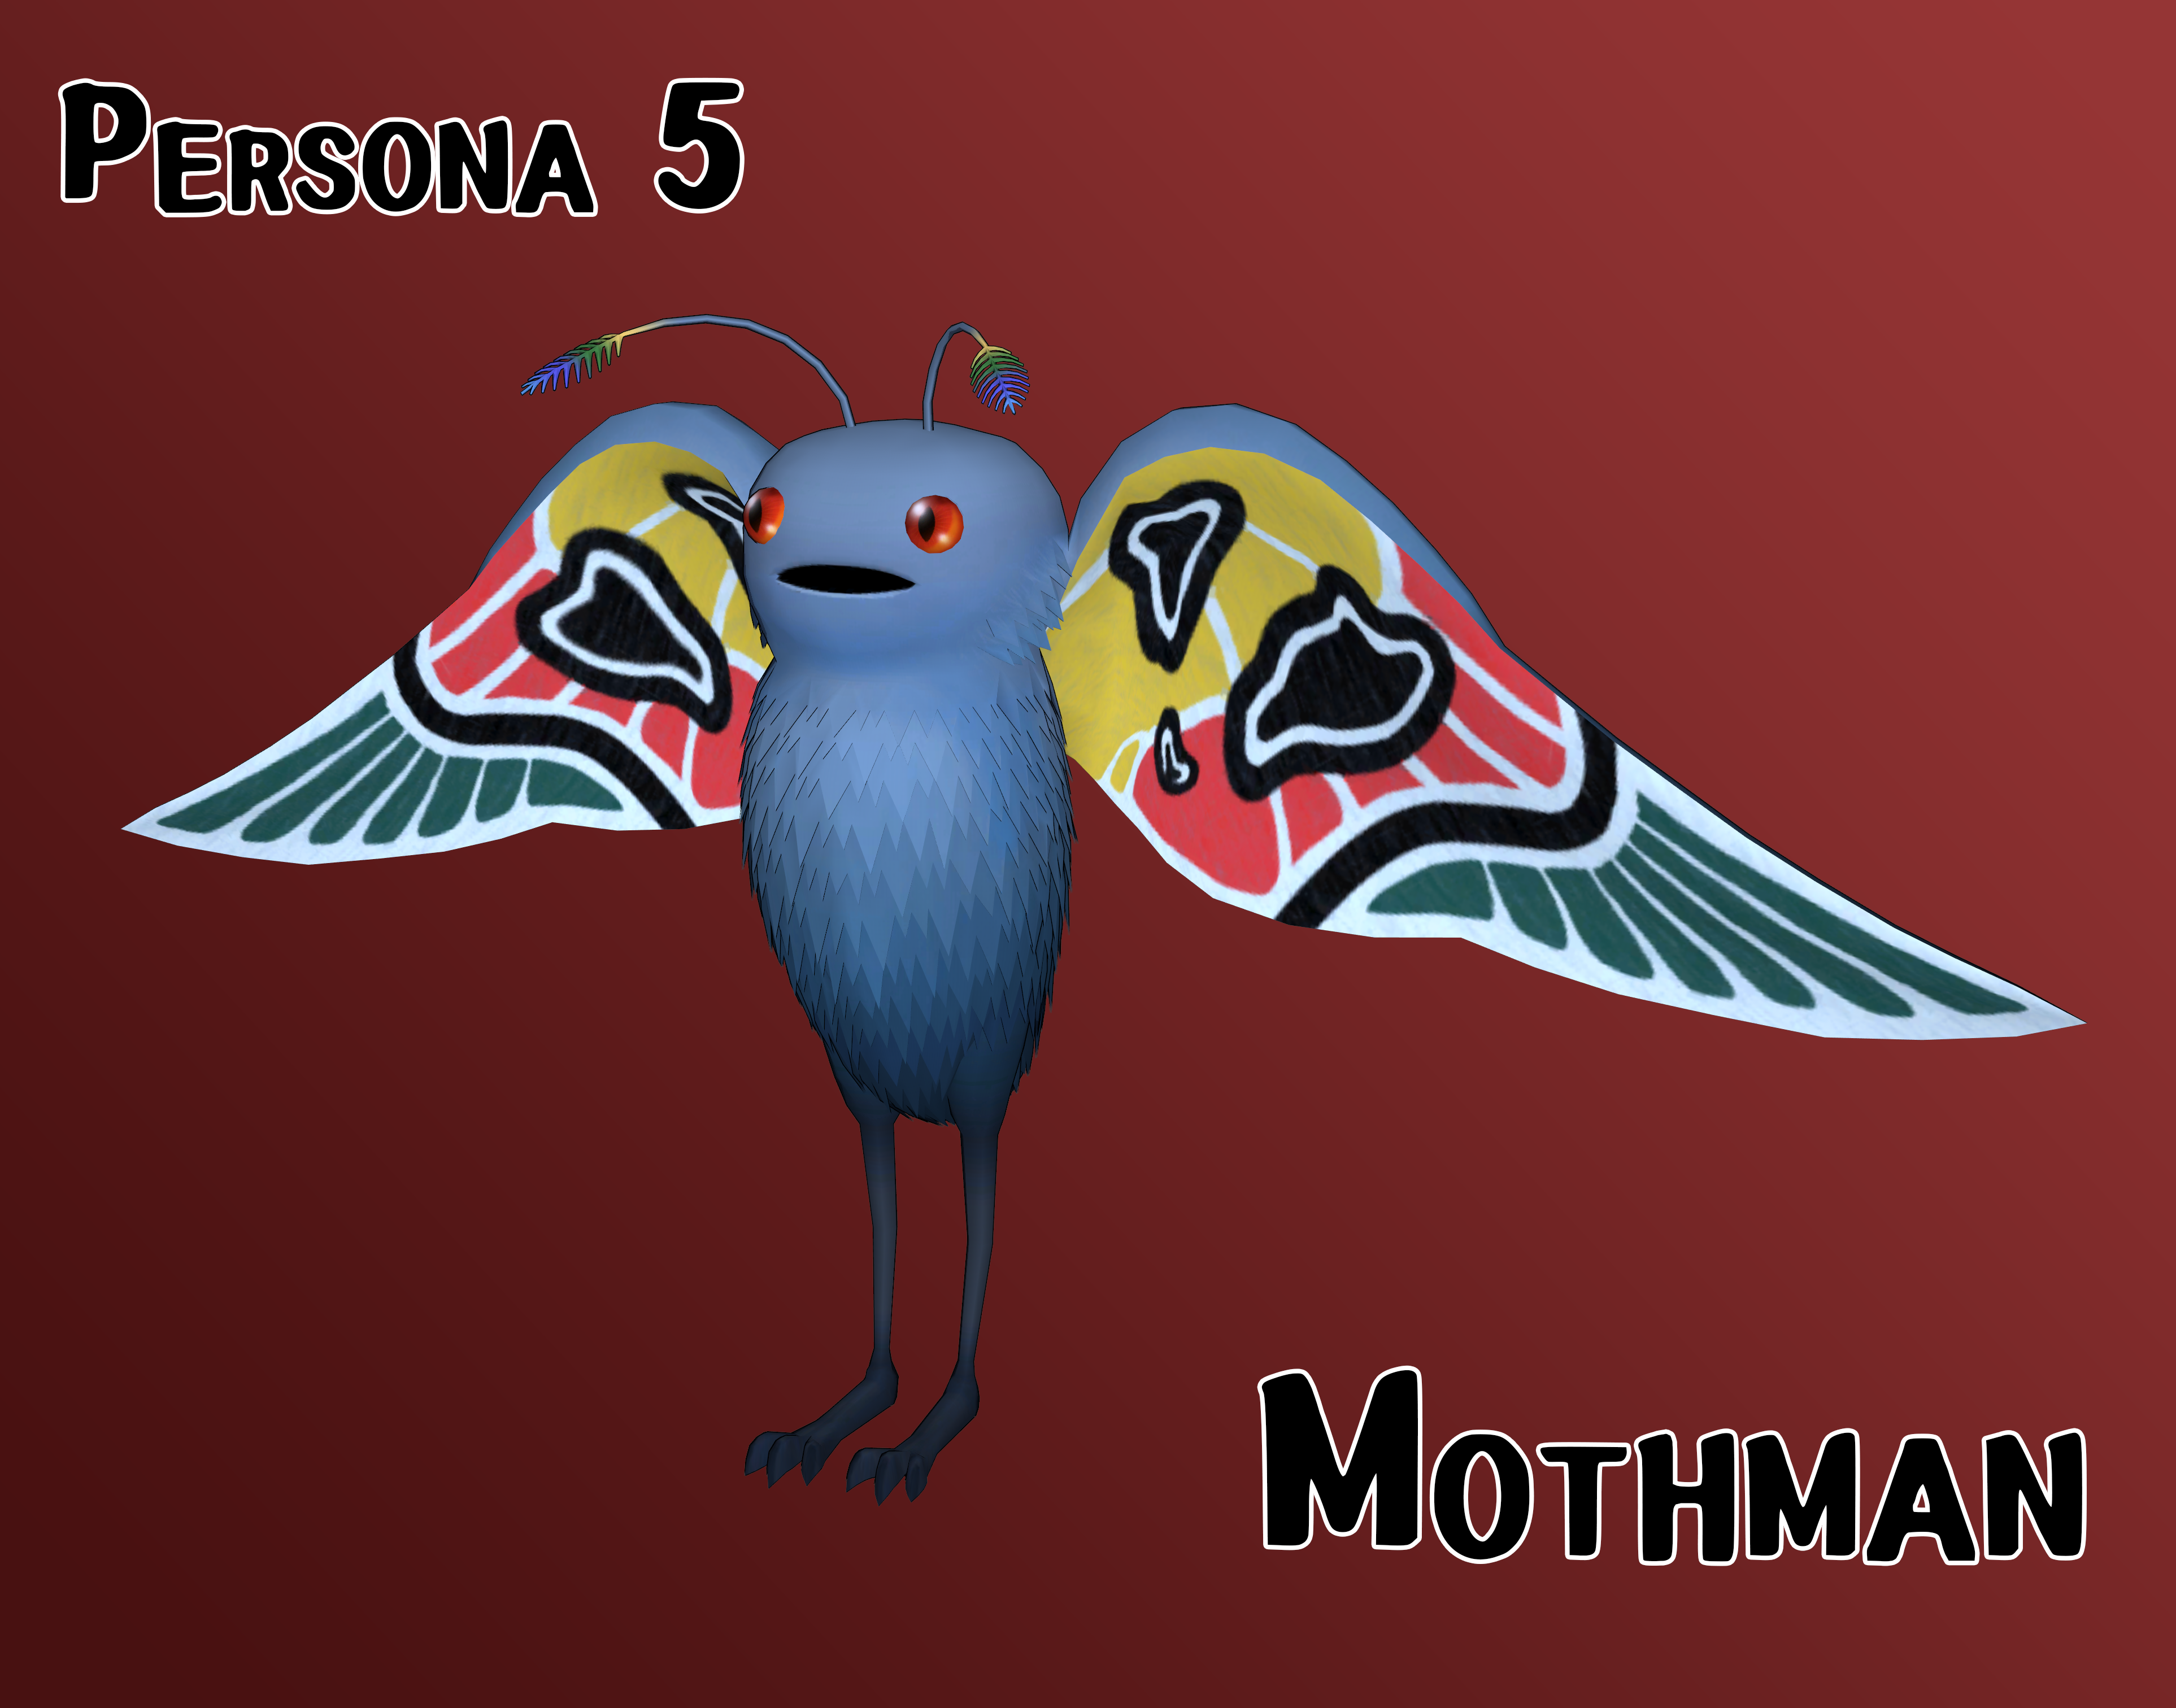 Persona 5: Mothman XPS/FBX by NecroCainALX on DeviantArt. 